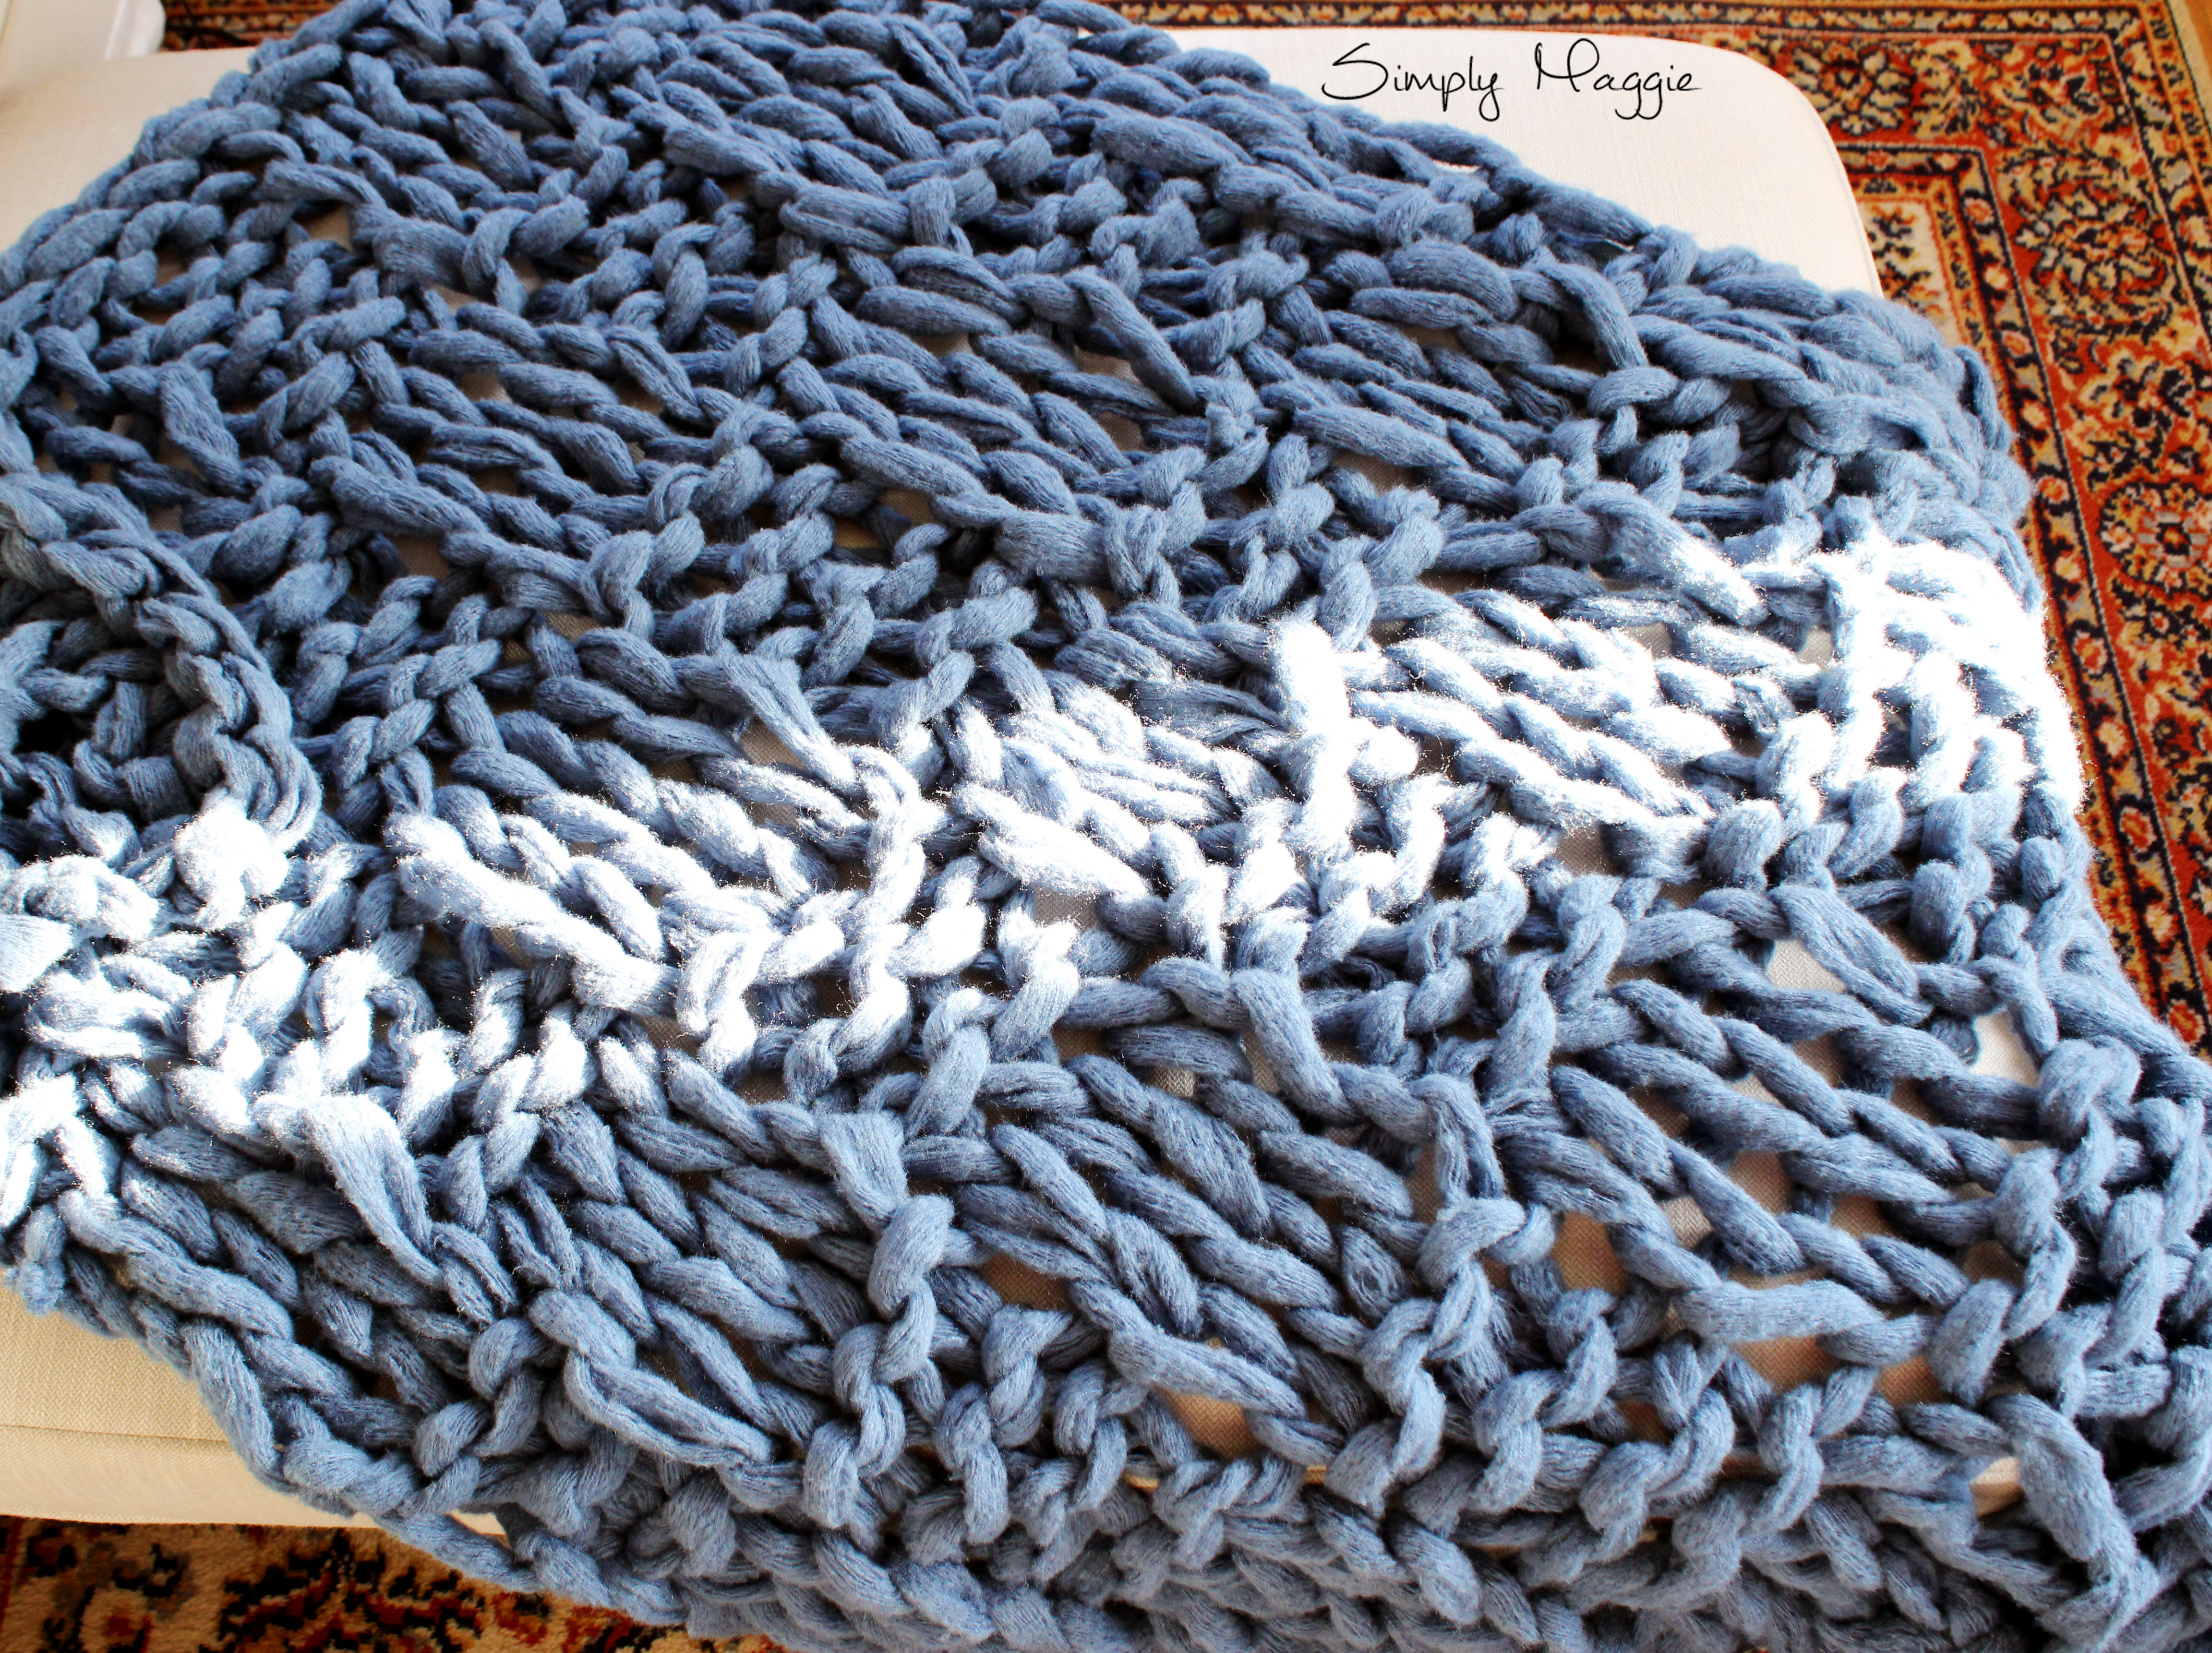 Crochet Weave Blanket Pattern How To Arm Knit A Basket Weave Stitch Blanket Simplymaggie